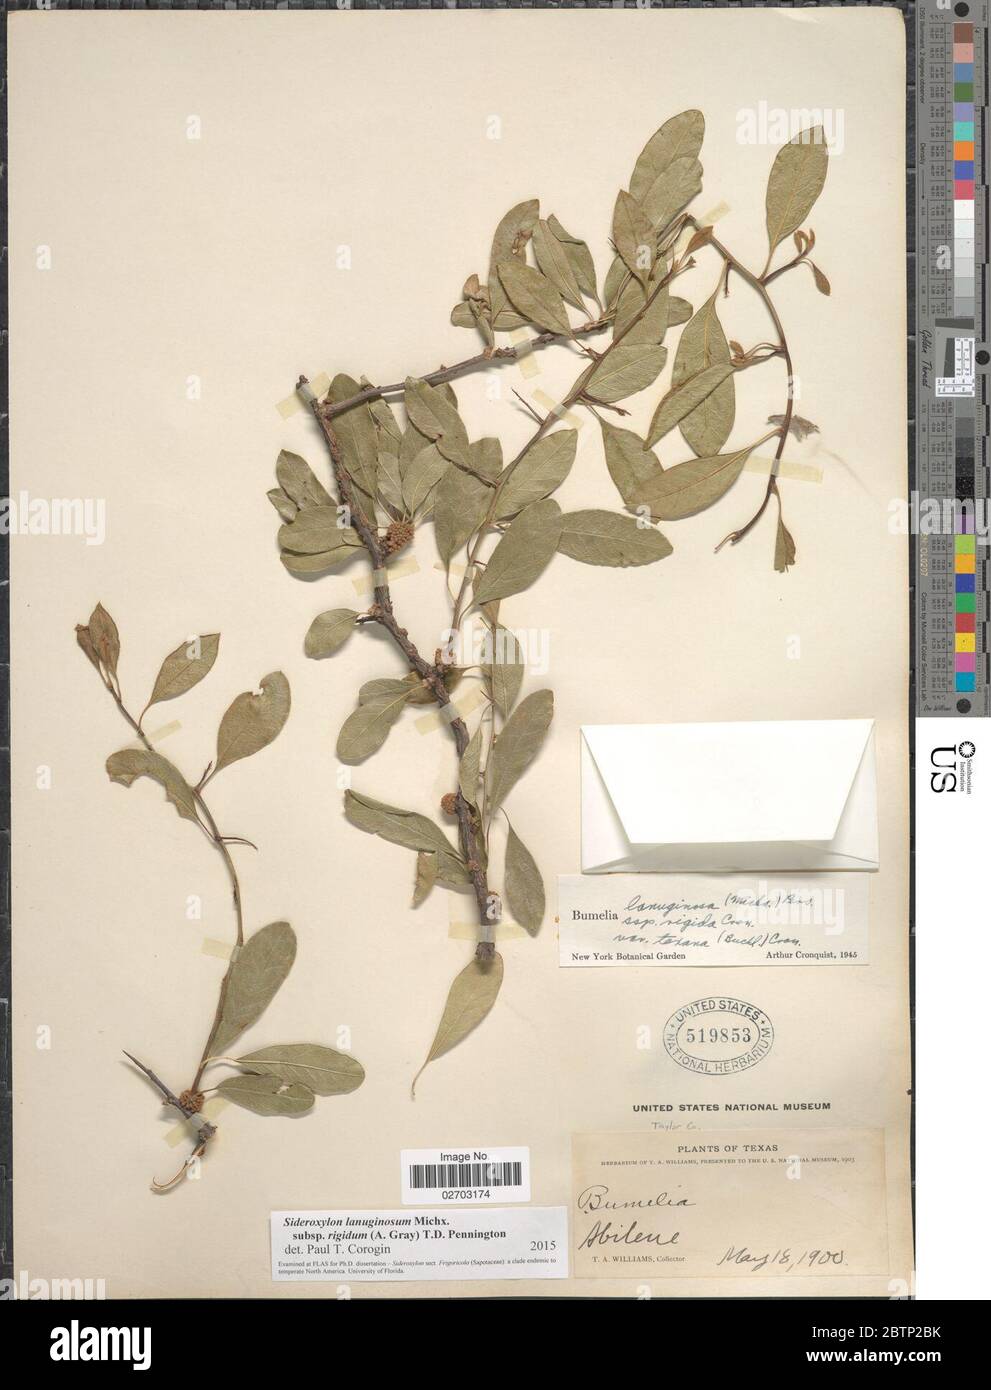 Sideroxylon lanuginosum subsp rigidum A Gray TD Penn. Stock Photo